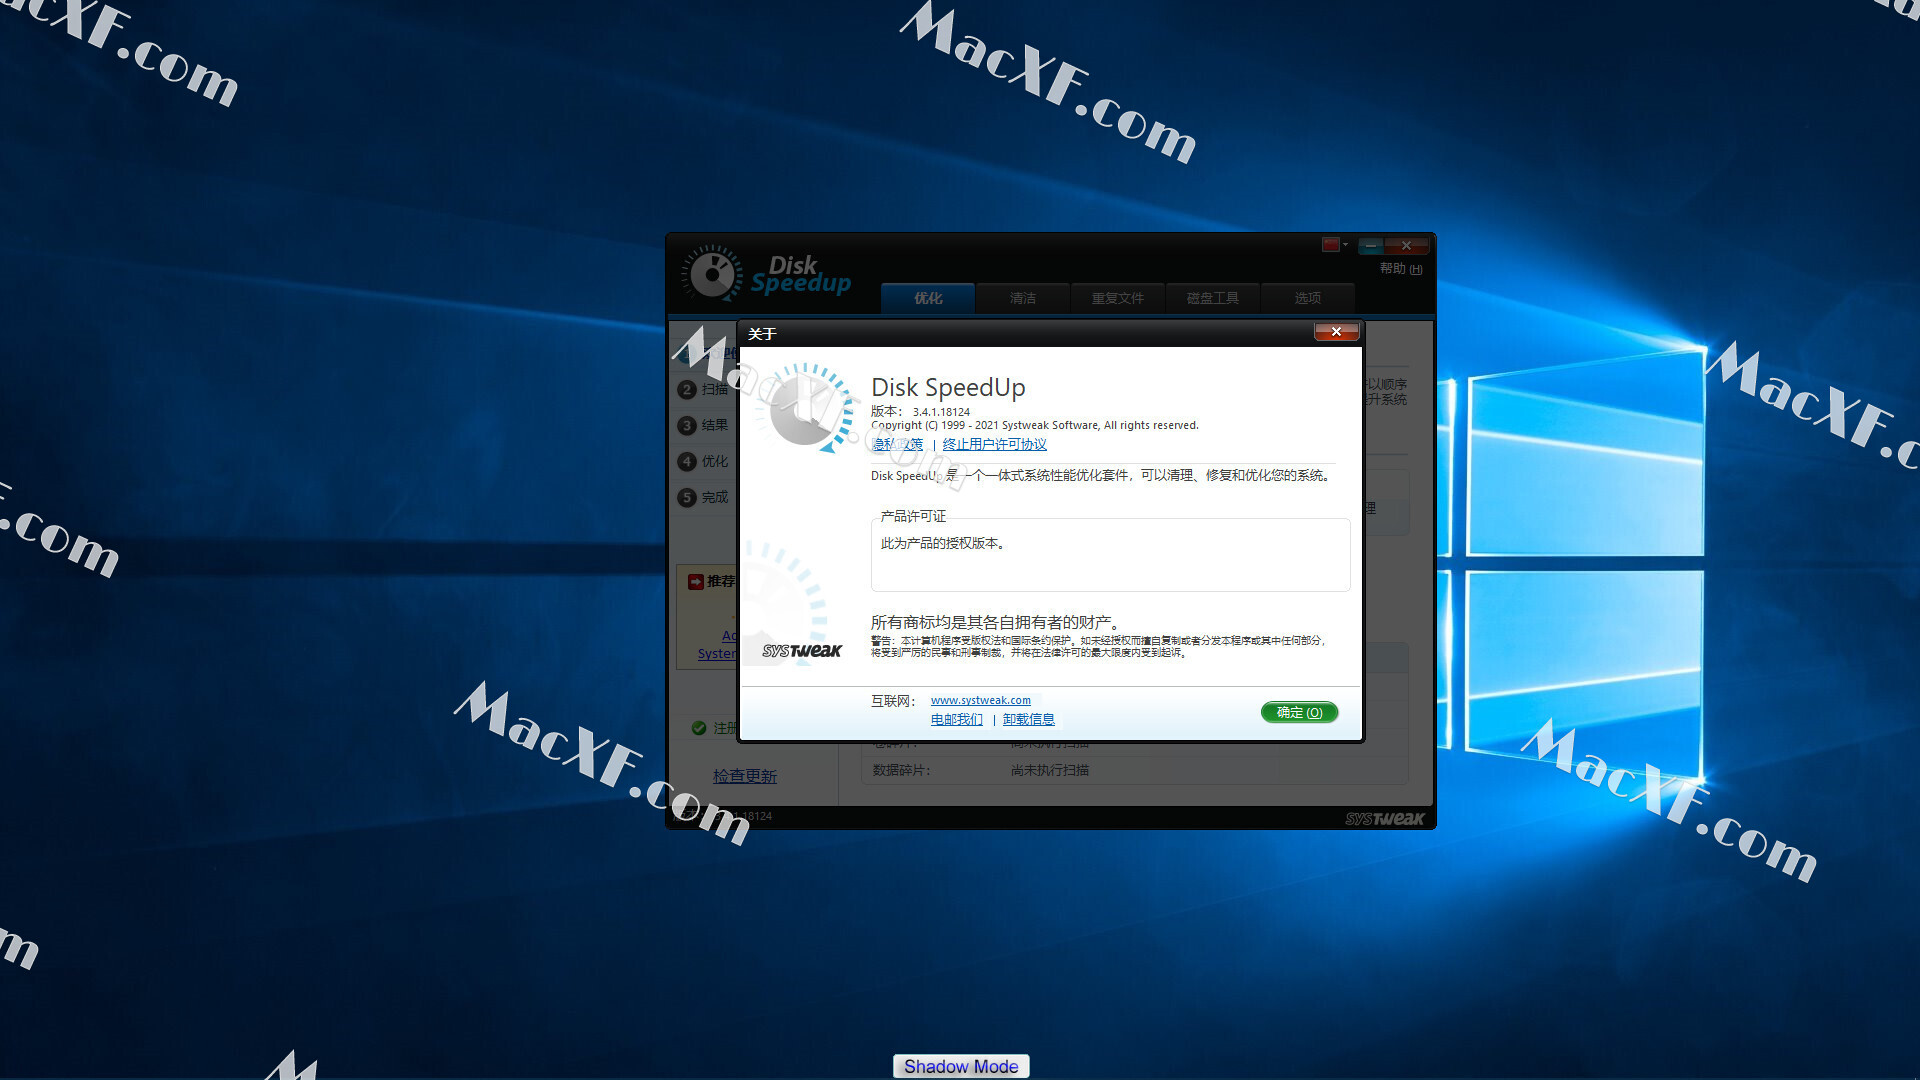 Systweak Disk Speedup 3.4.1.18261 download the new for windows